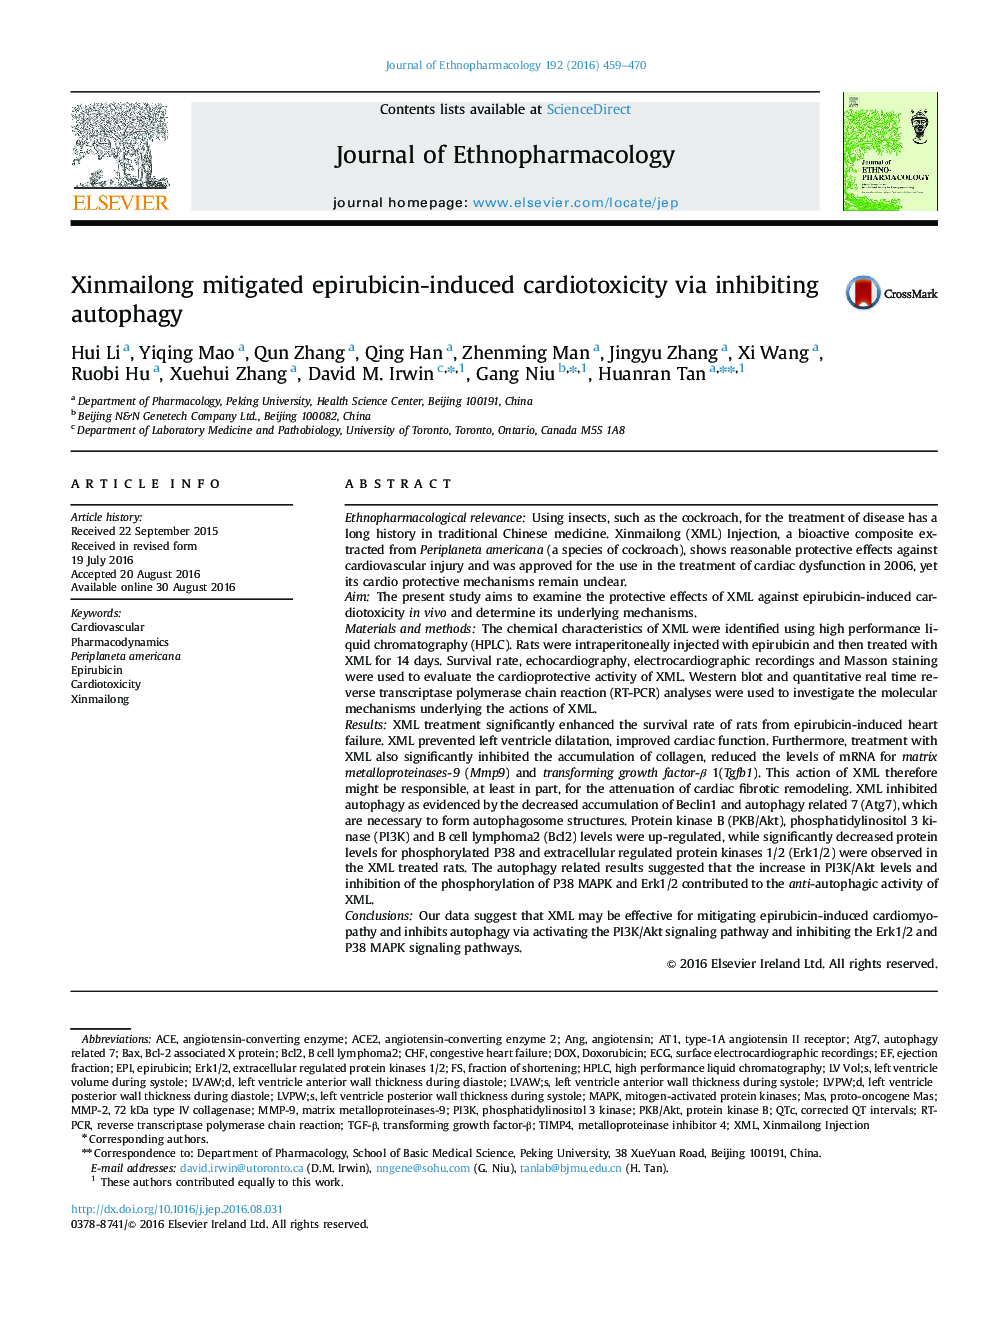 Xinmailong mitigated epirubicin-induced cardiotoxicity via inhibiting autophagy